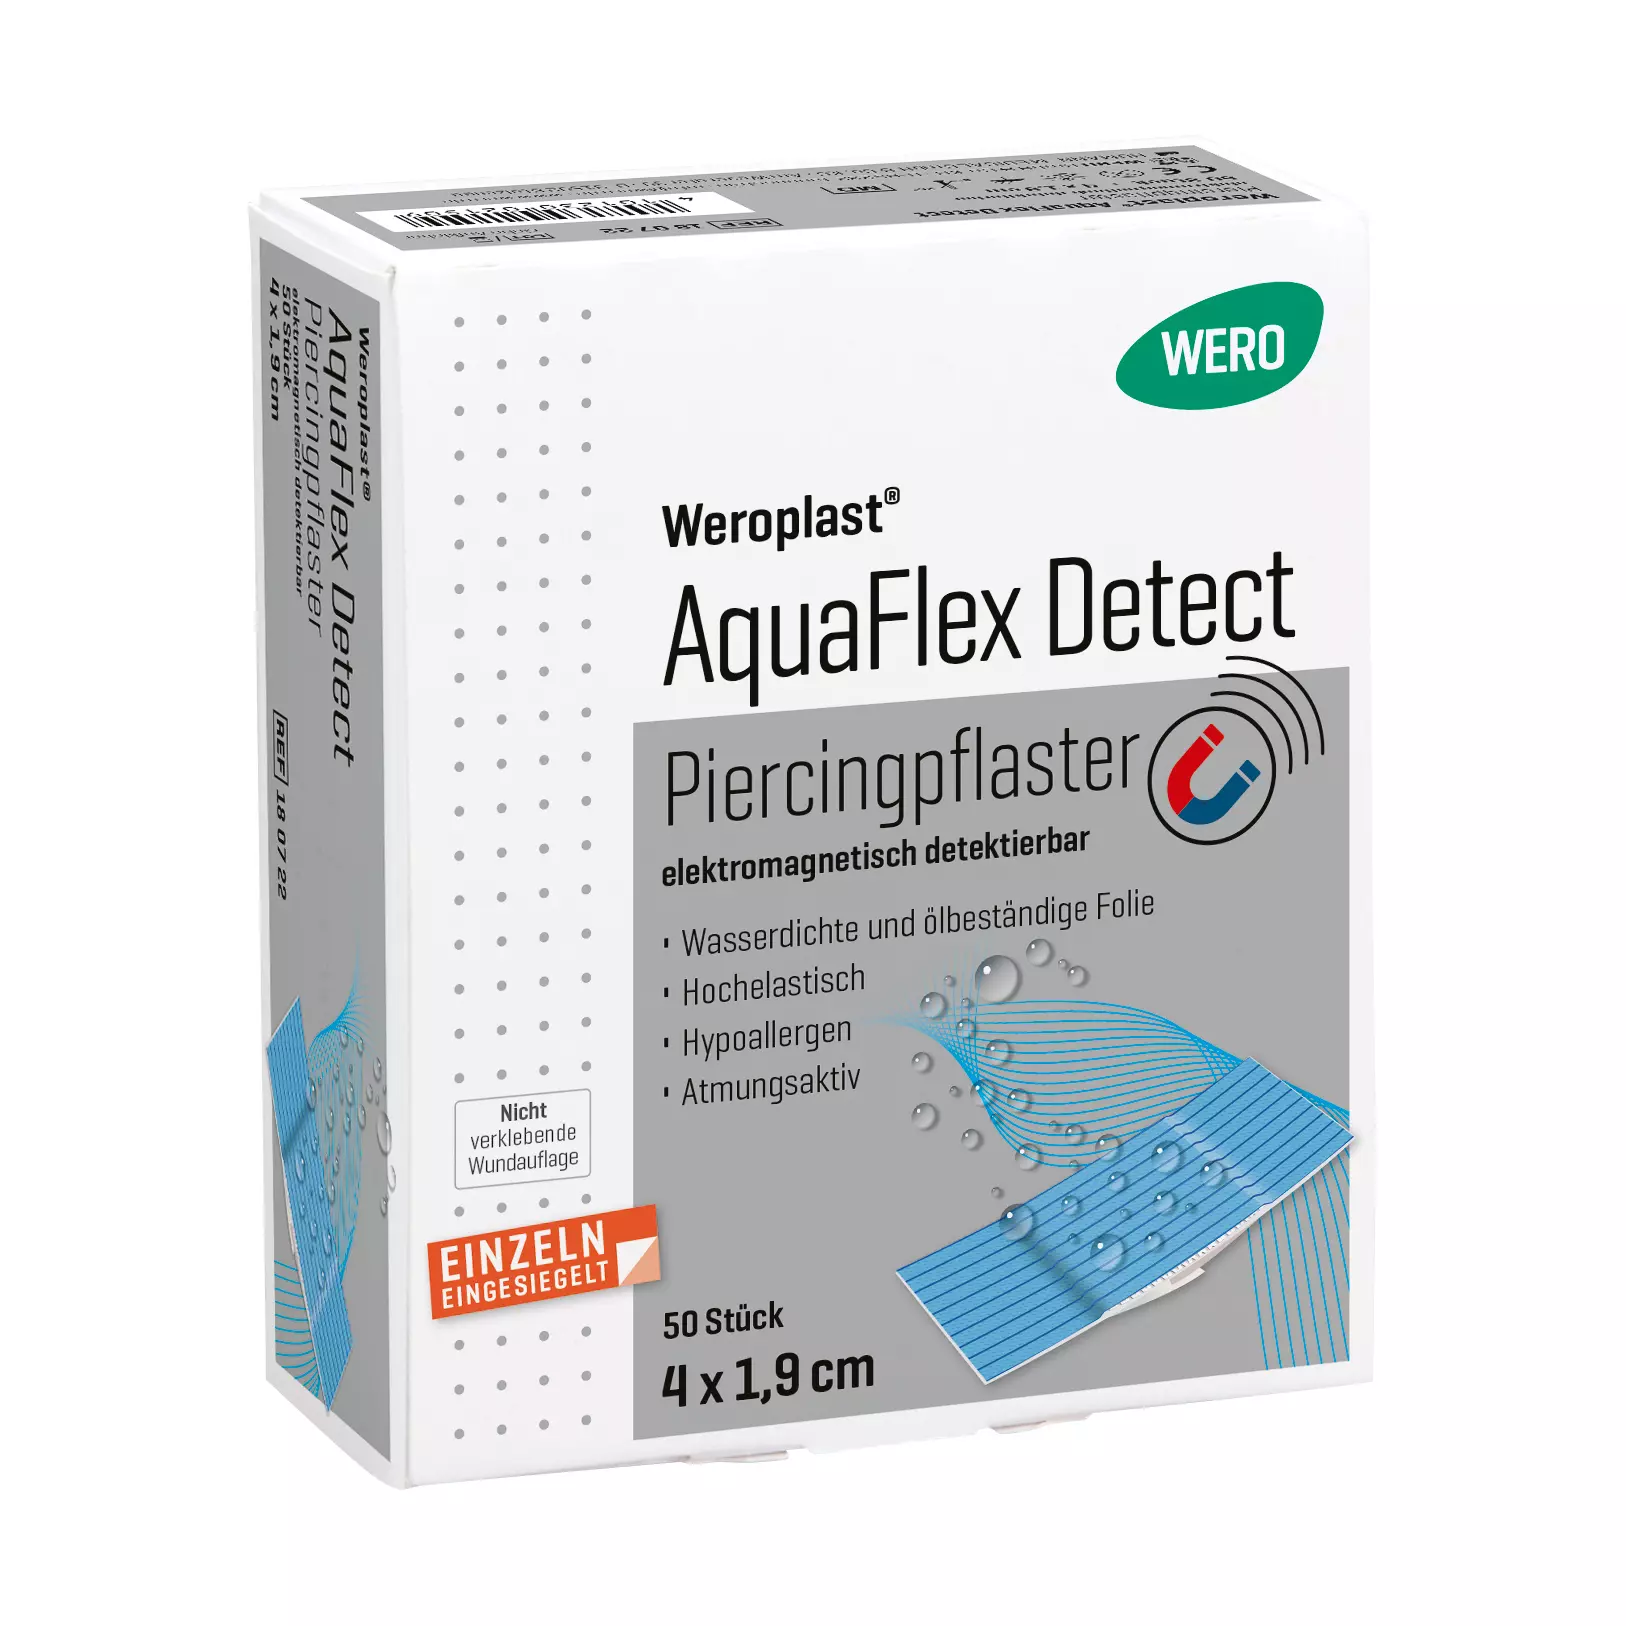 Piercing plasters Weroplast® AquaFlex Detect